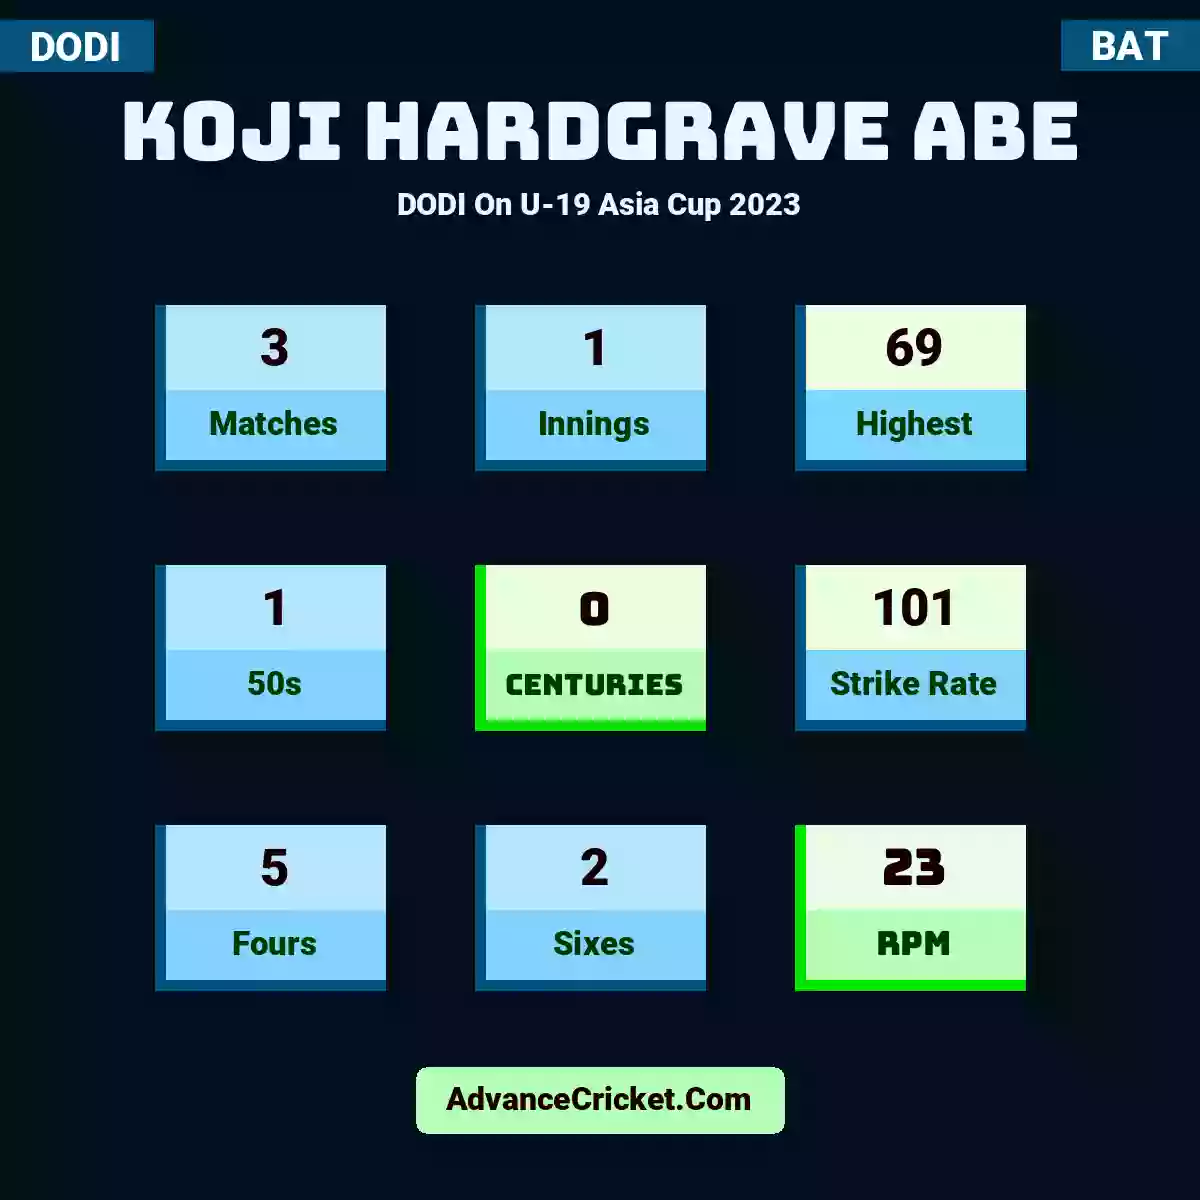 Koji Hardgrave Abe DODI  On U-19 Asia Cup 2023, Koji Hardgrave Abe played 3 matches, scored 69 runs as highest, 1 half-centuries, and 0 centuries, with a strike rate of 101. K.Hardgrave Abe hit 5 fours and 2 sixes, with an RPM of 23.